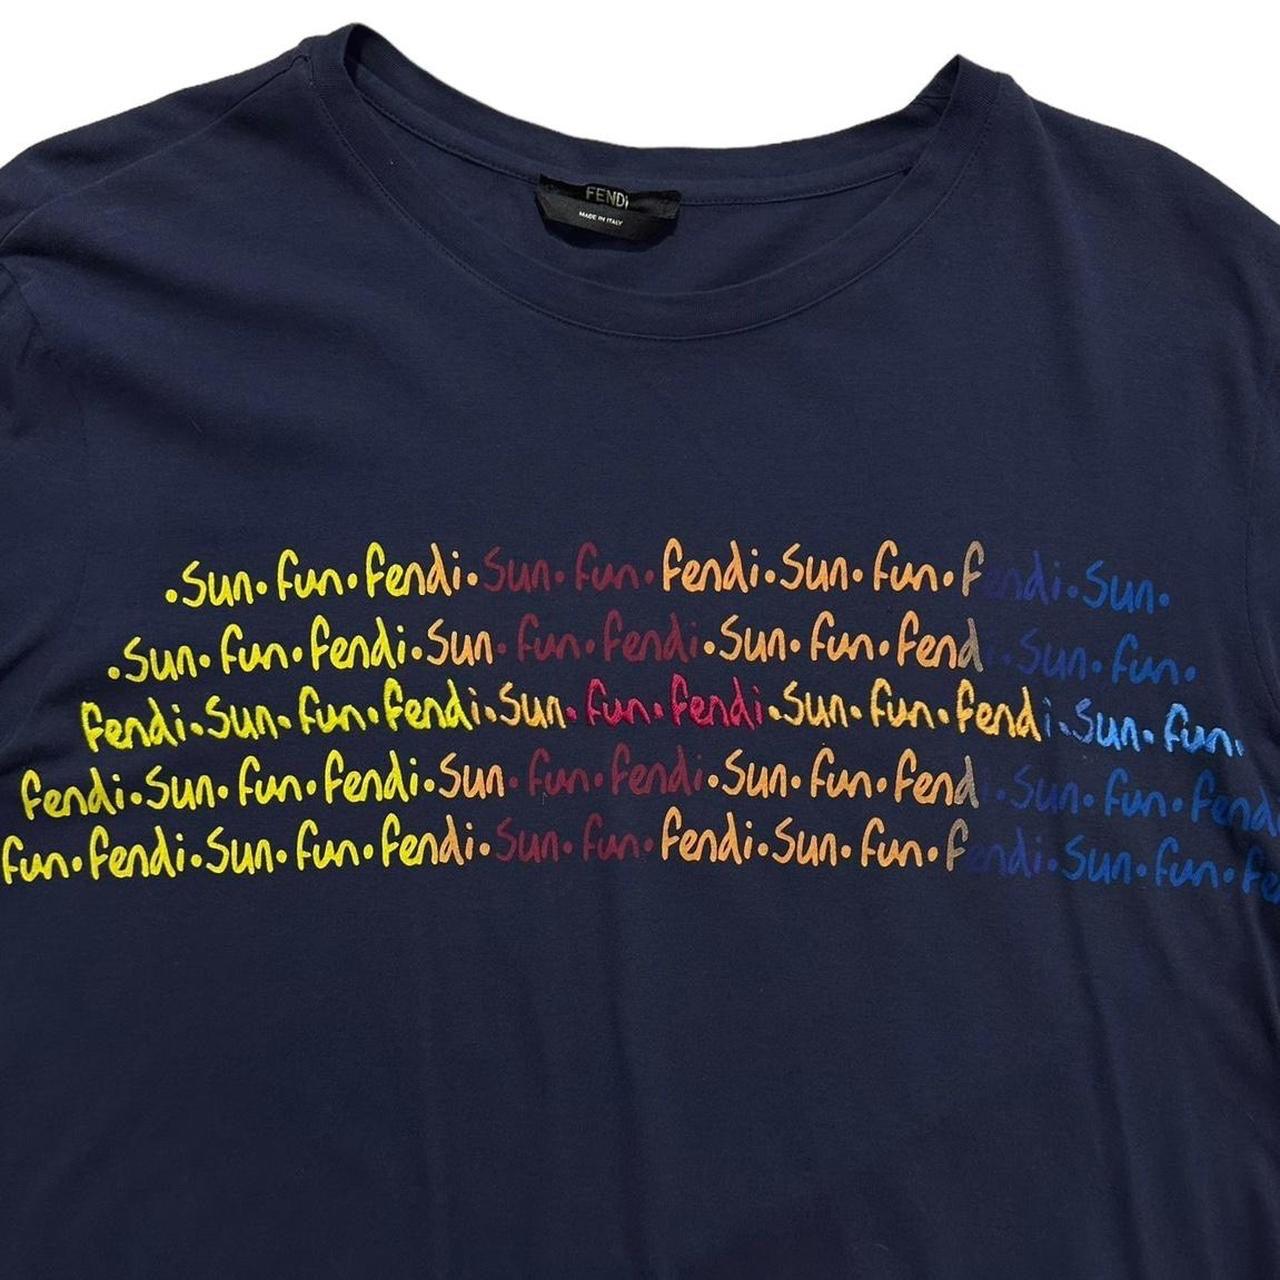 Fendi Sun Fun T-Shirt - Known Source